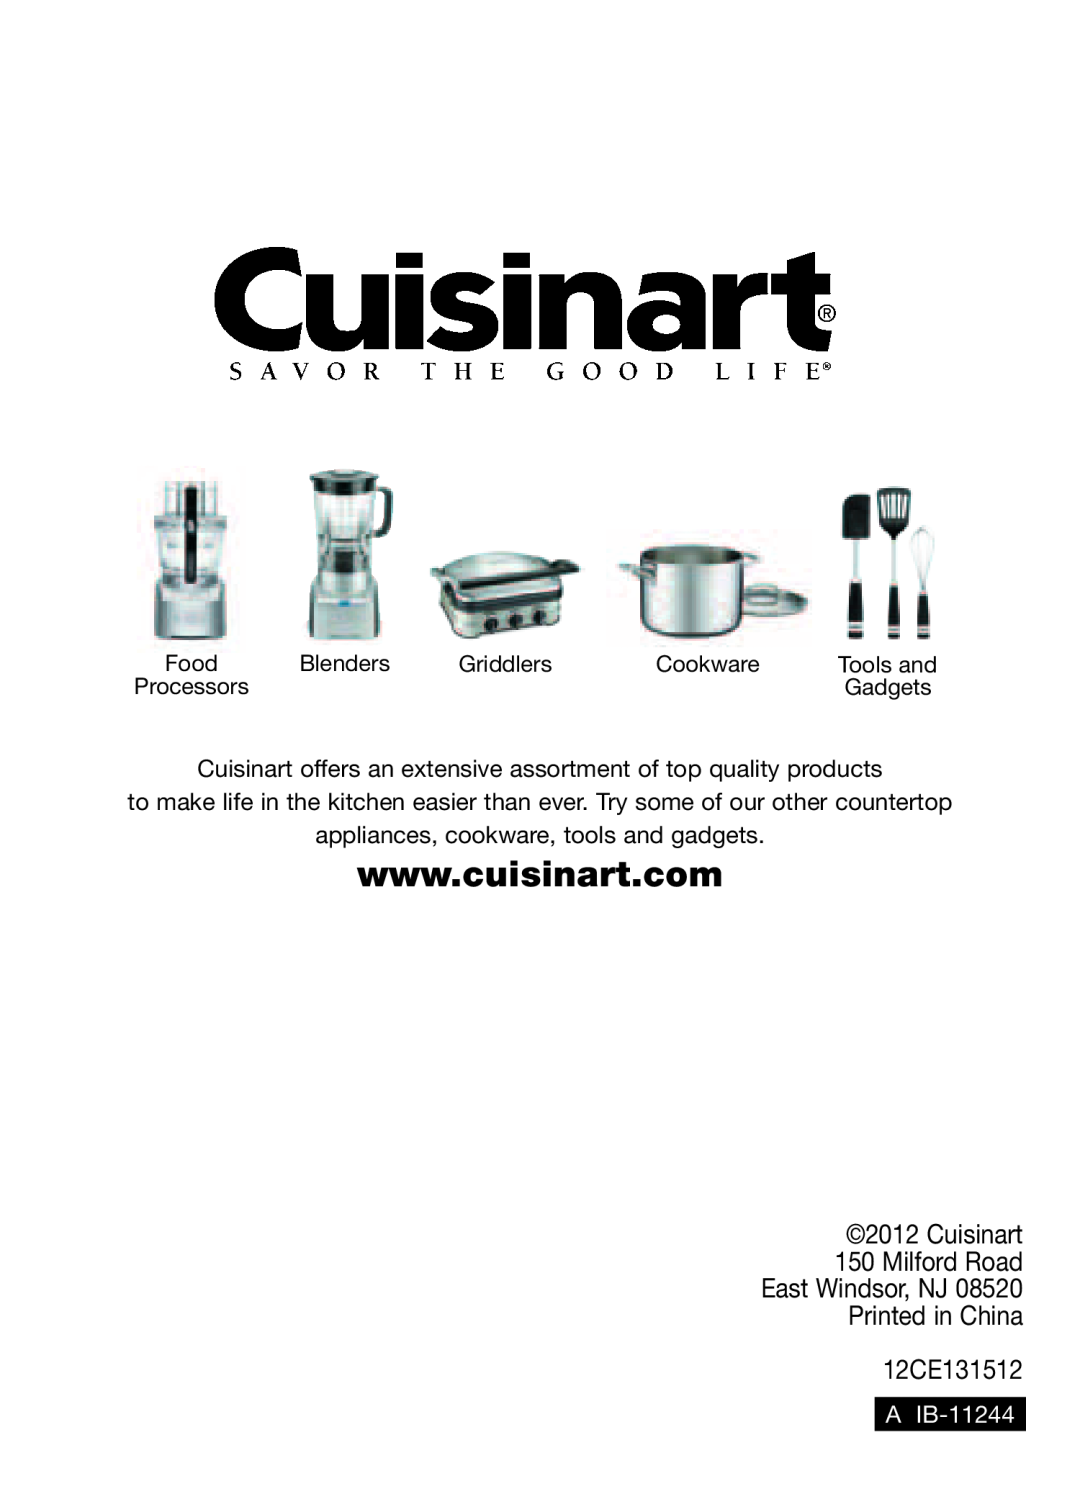 Cuisinart CEC-10 manual A IB-11244, Cuisinart 150 Milford Road East Windsor, NJ Printed in China, 12CE131512 